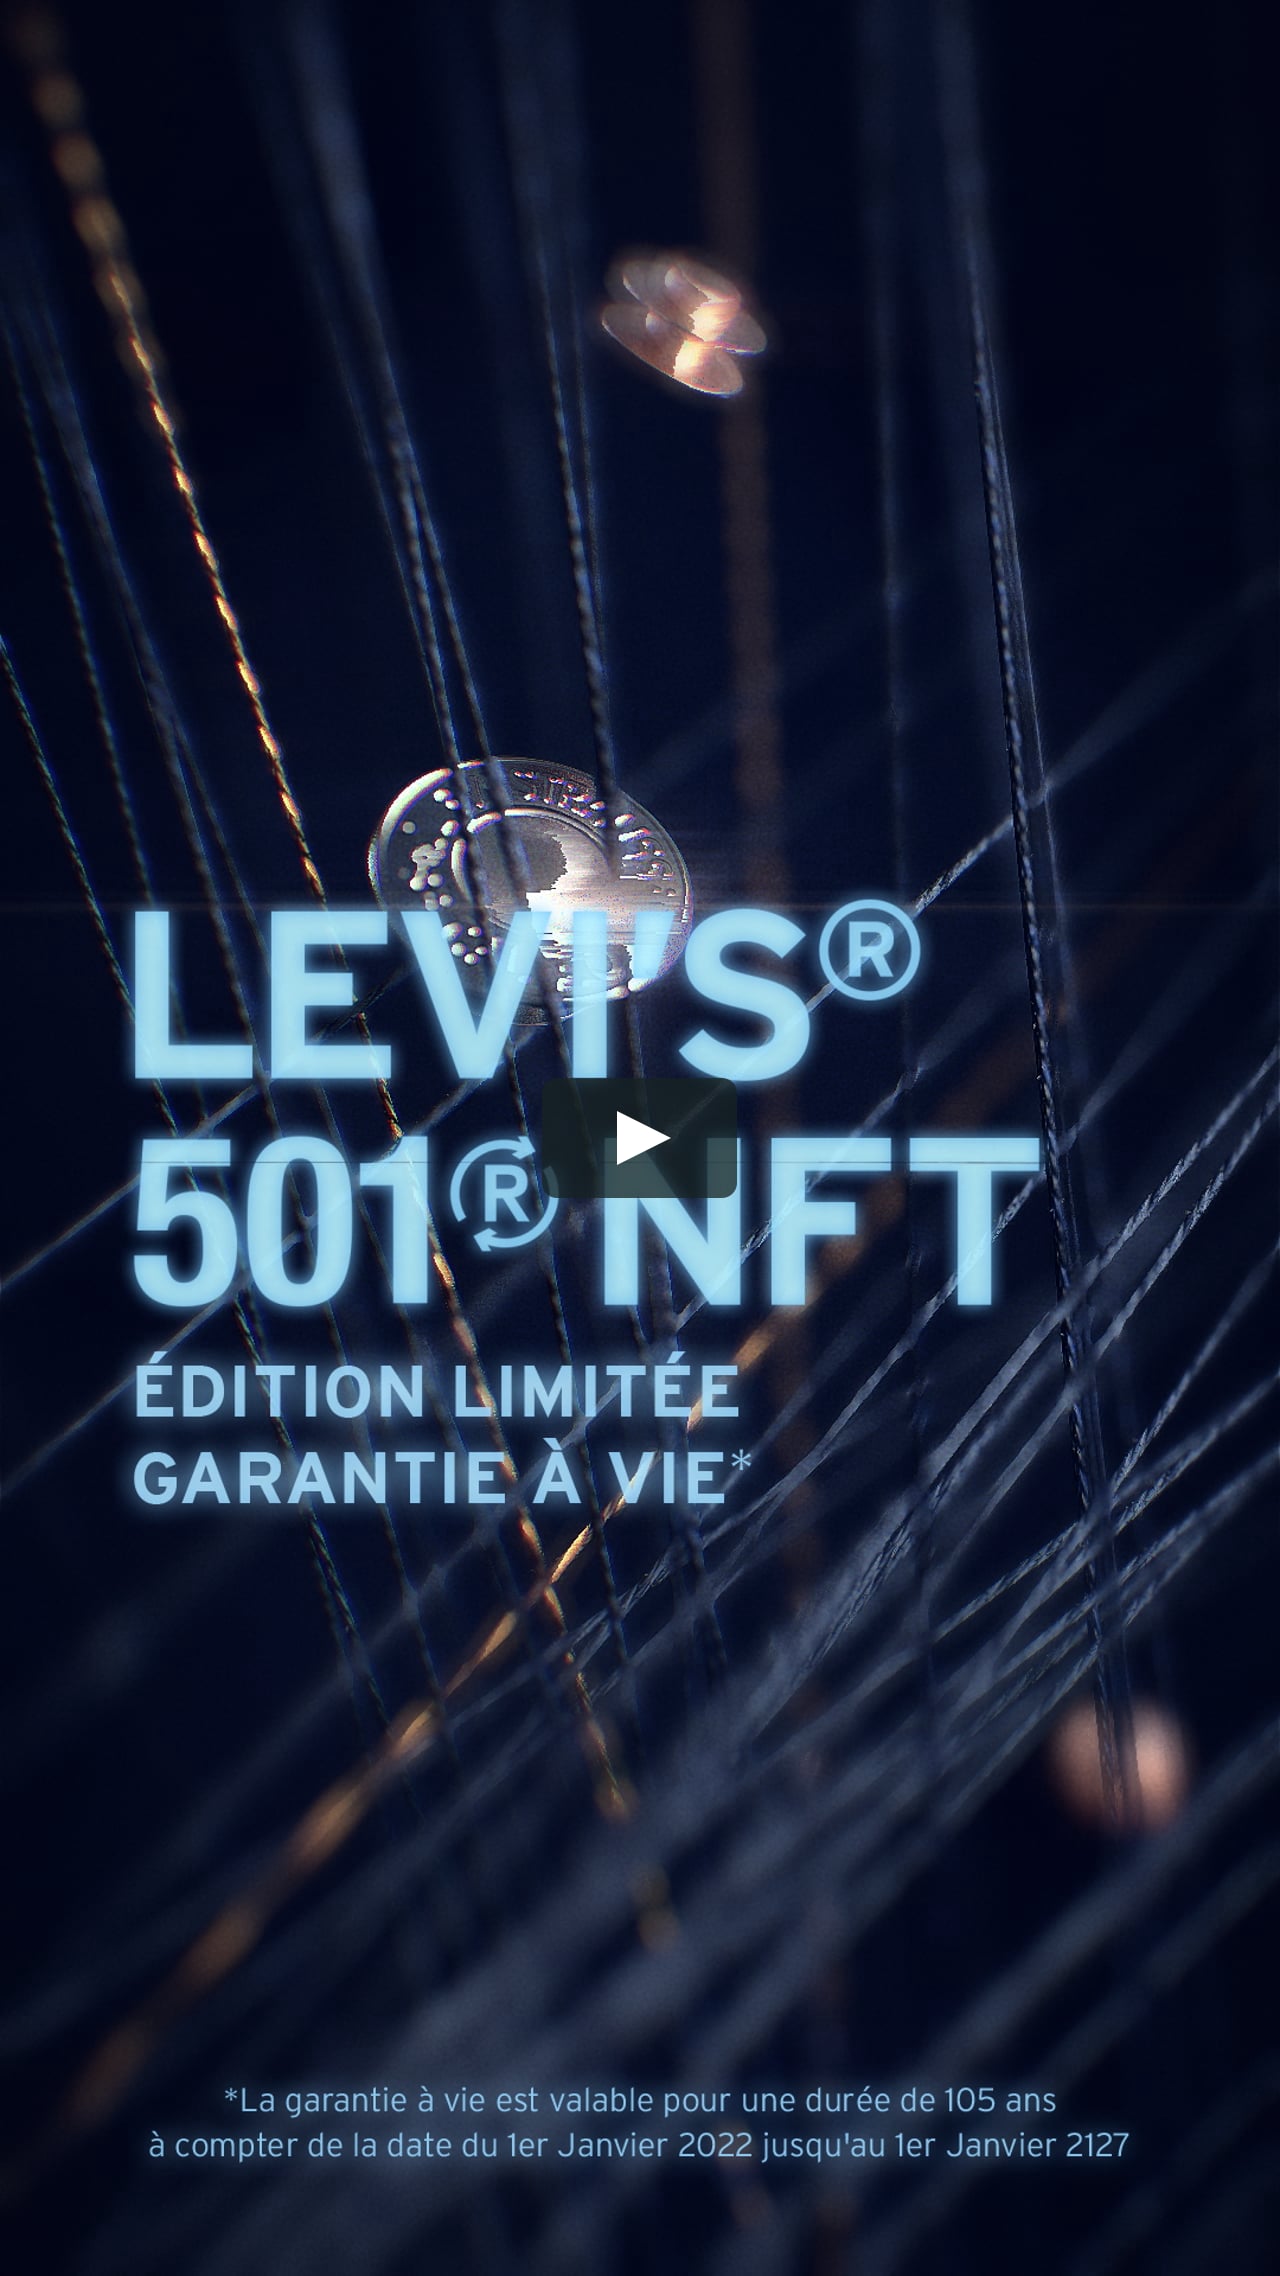 Levis - NFT on Vimeo